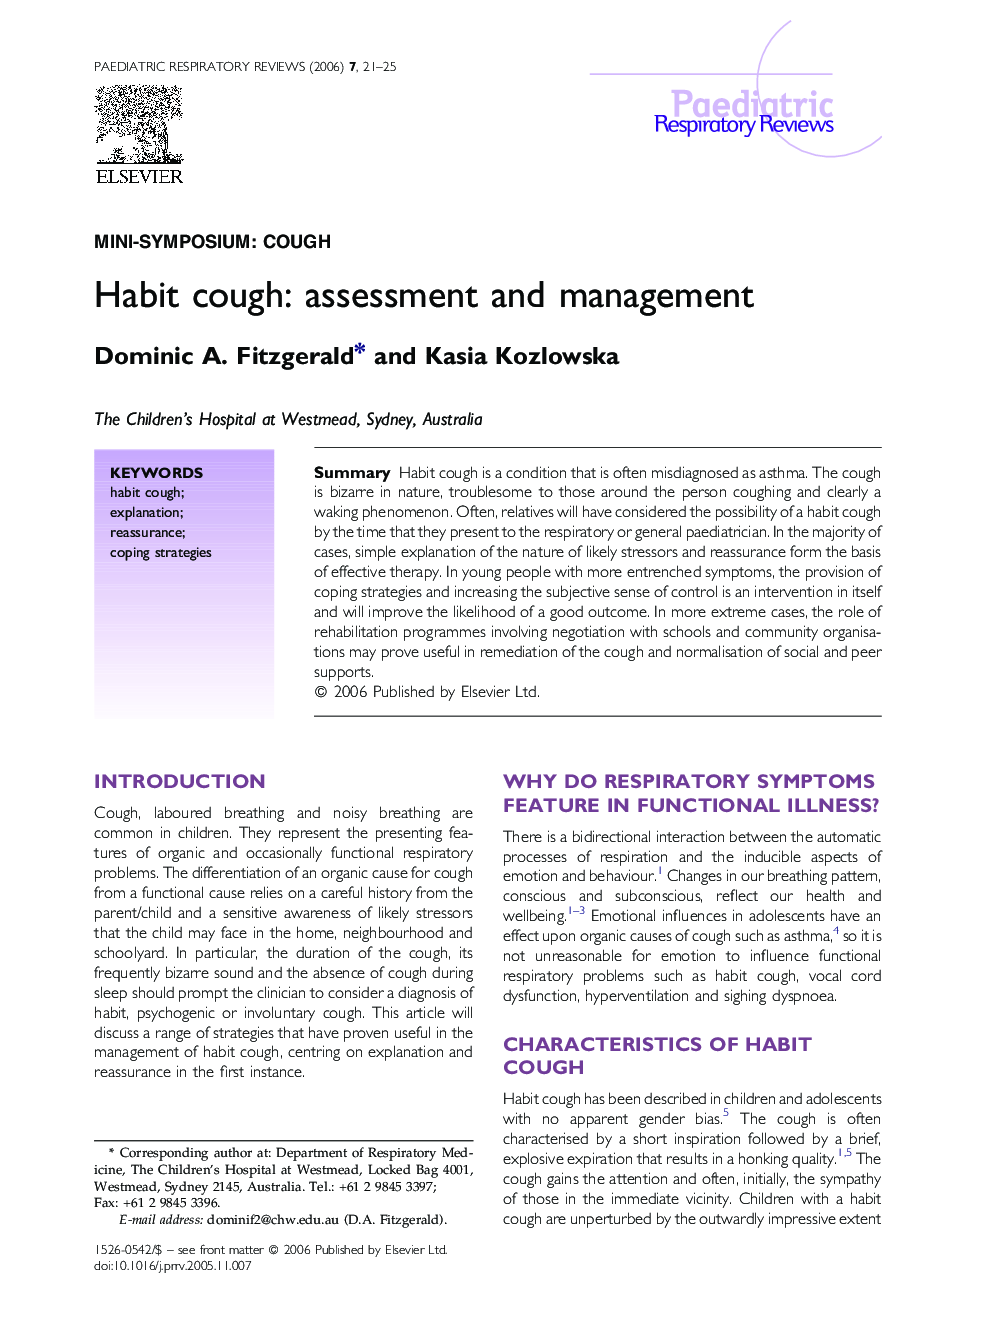 Habit cough: assessment and management